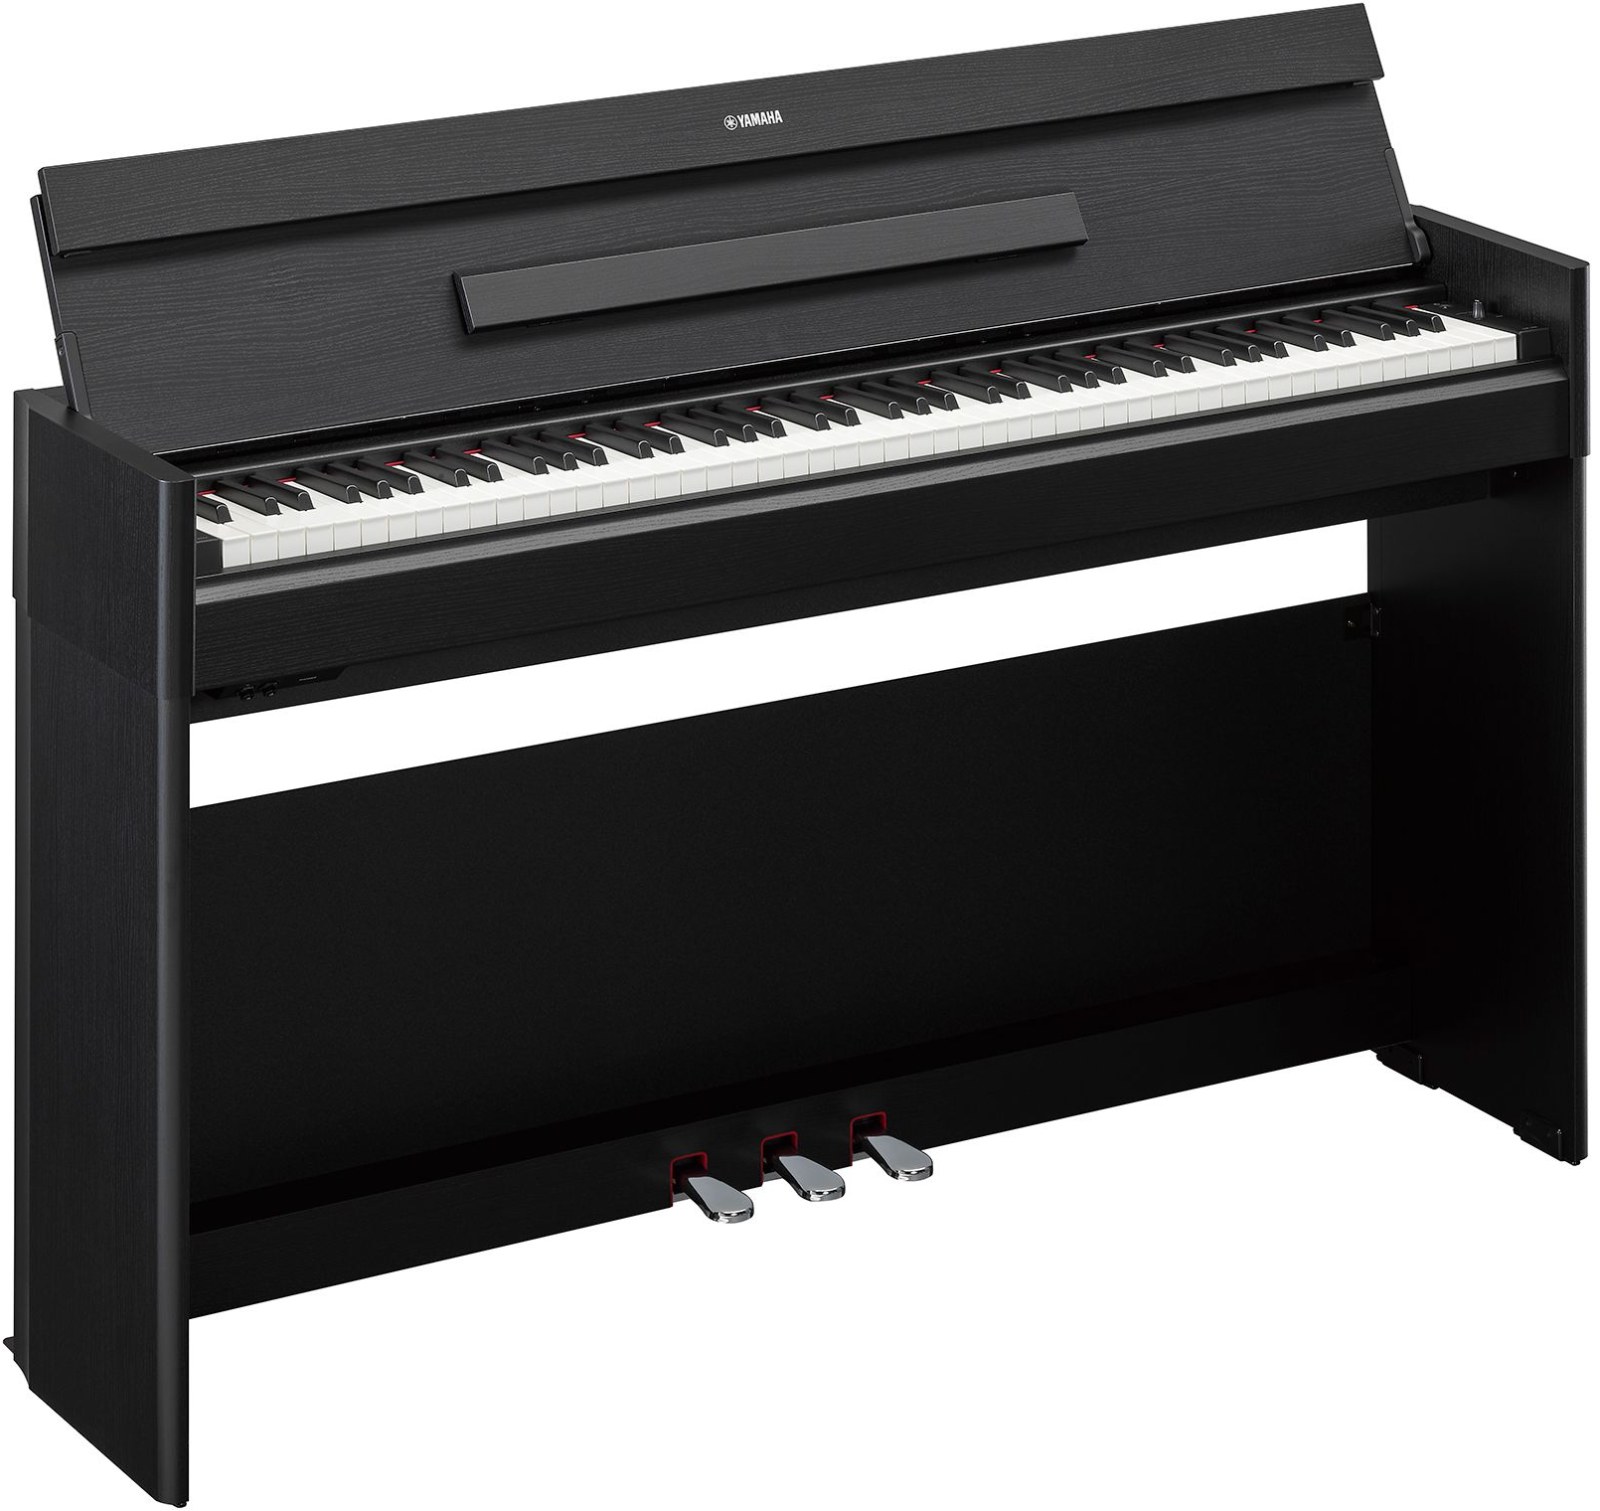 Yamaha Ydp-s55 B - Digital piano with stand - Variation 1